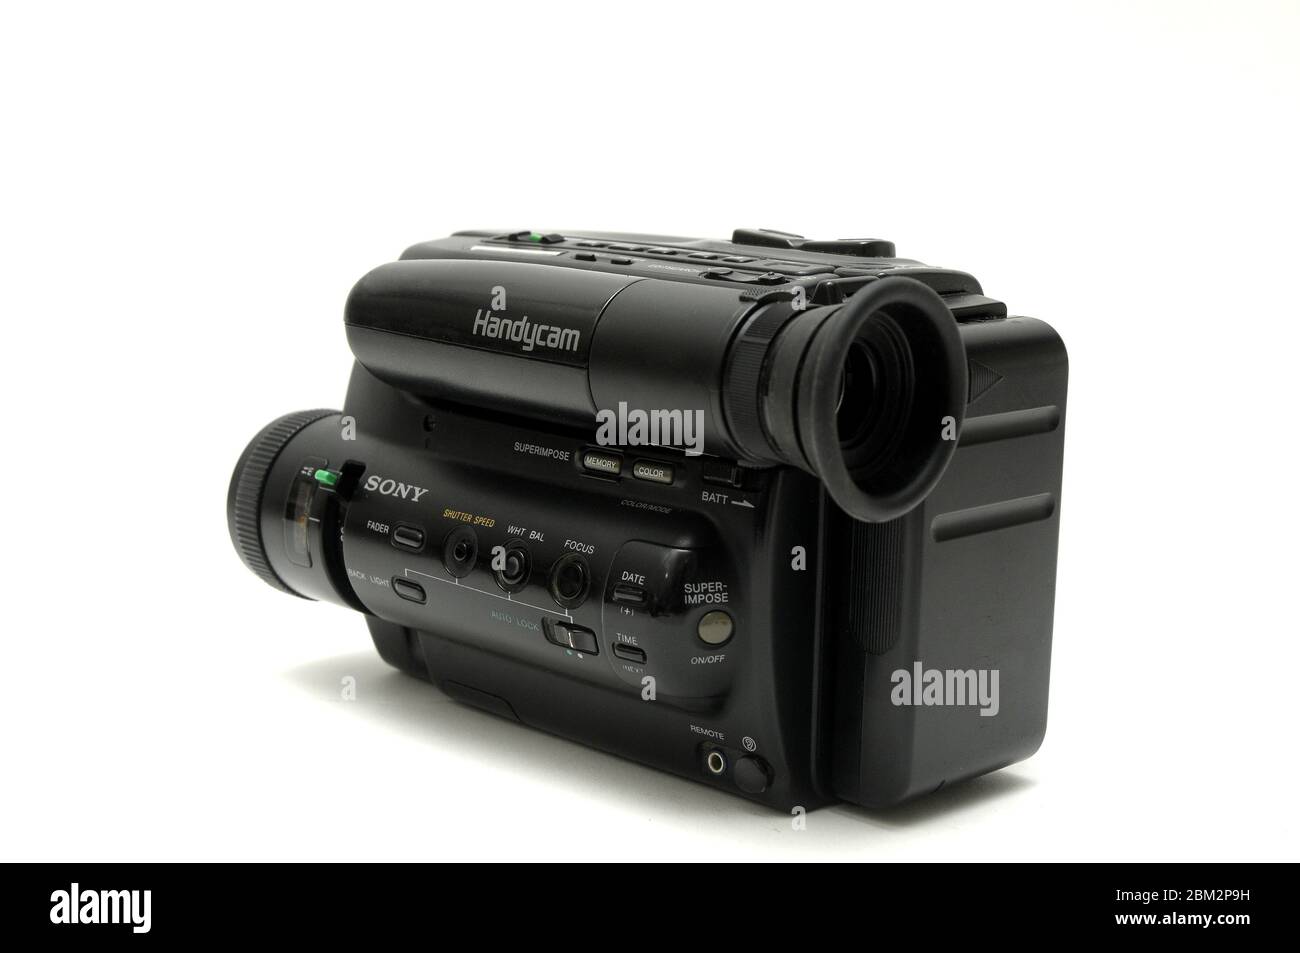 Sony Handycam Video Camera, 1990s Stock Photo - Alamy